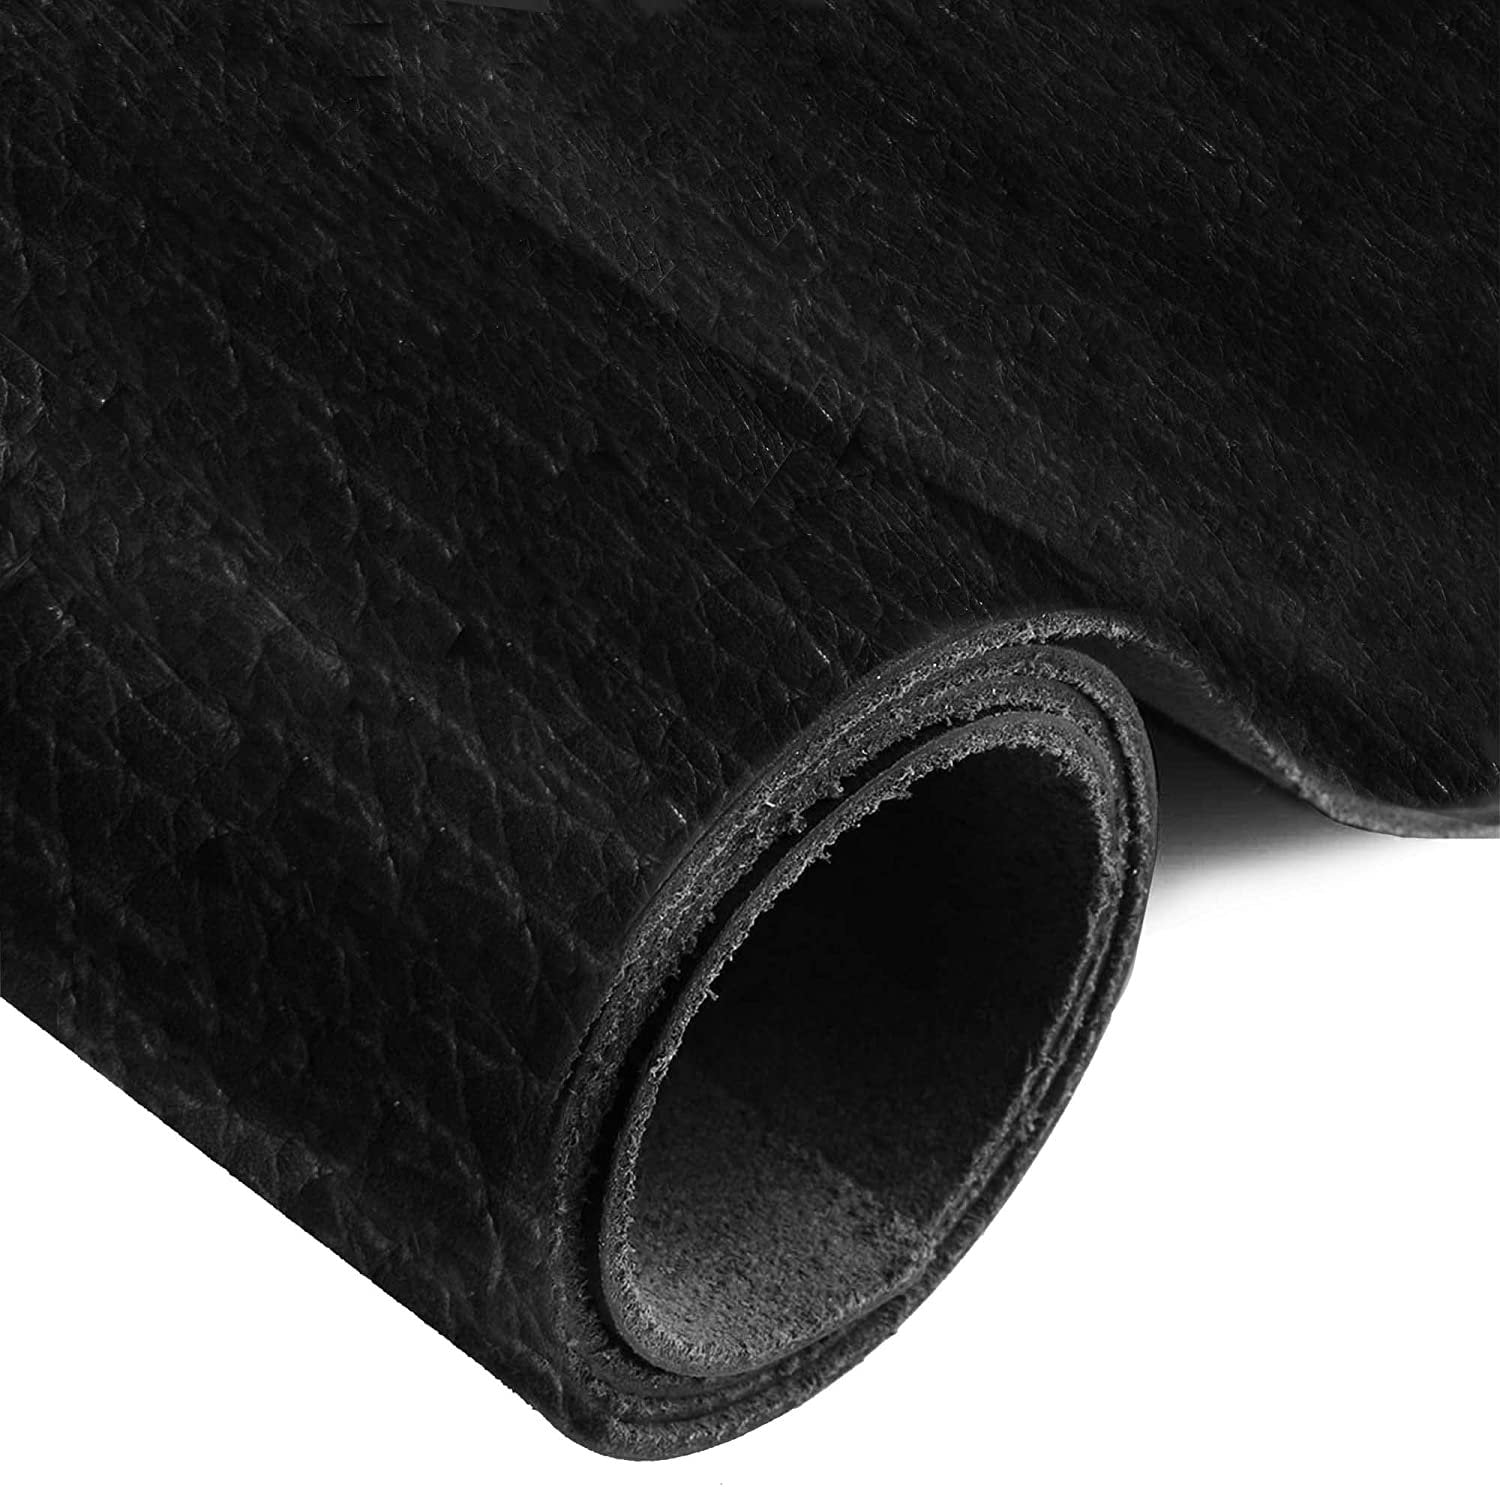 U.S.A Leather Buffalo skin hide Full Grain Black Pre-Cut 6" By 6" Inches 4 oz 